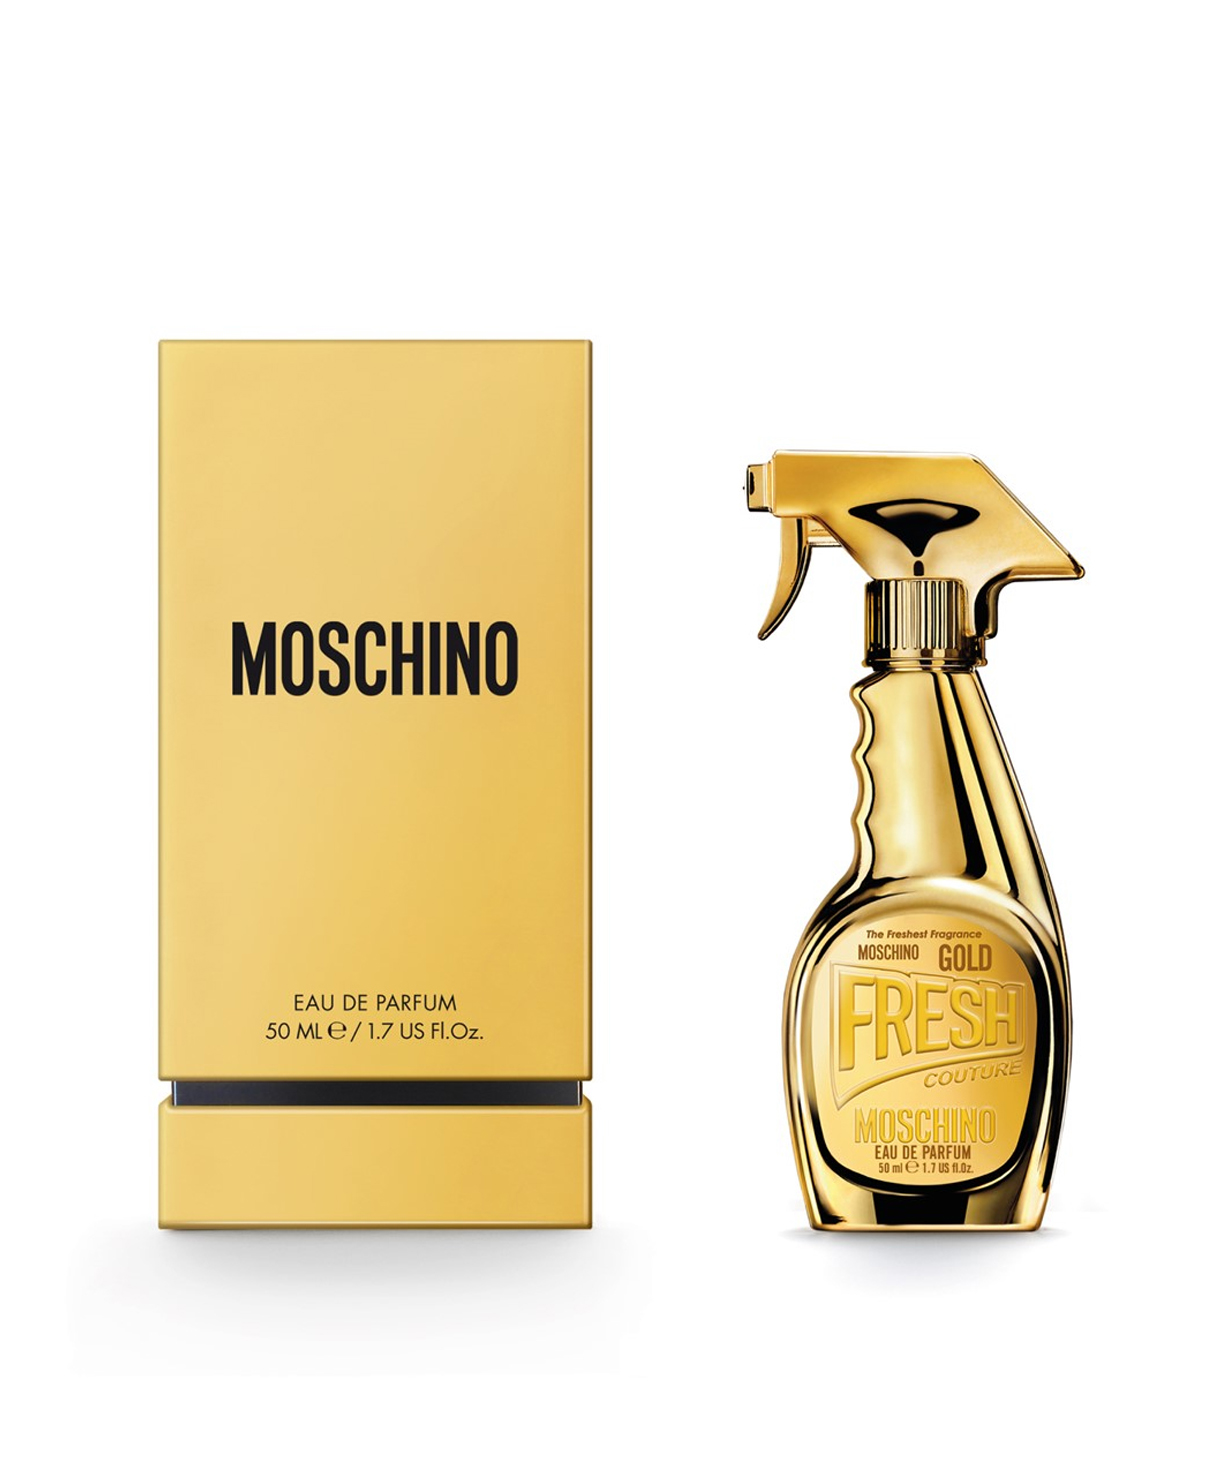 Perfume «Moschino» Gold Fresh Couture, for women, 50 ml